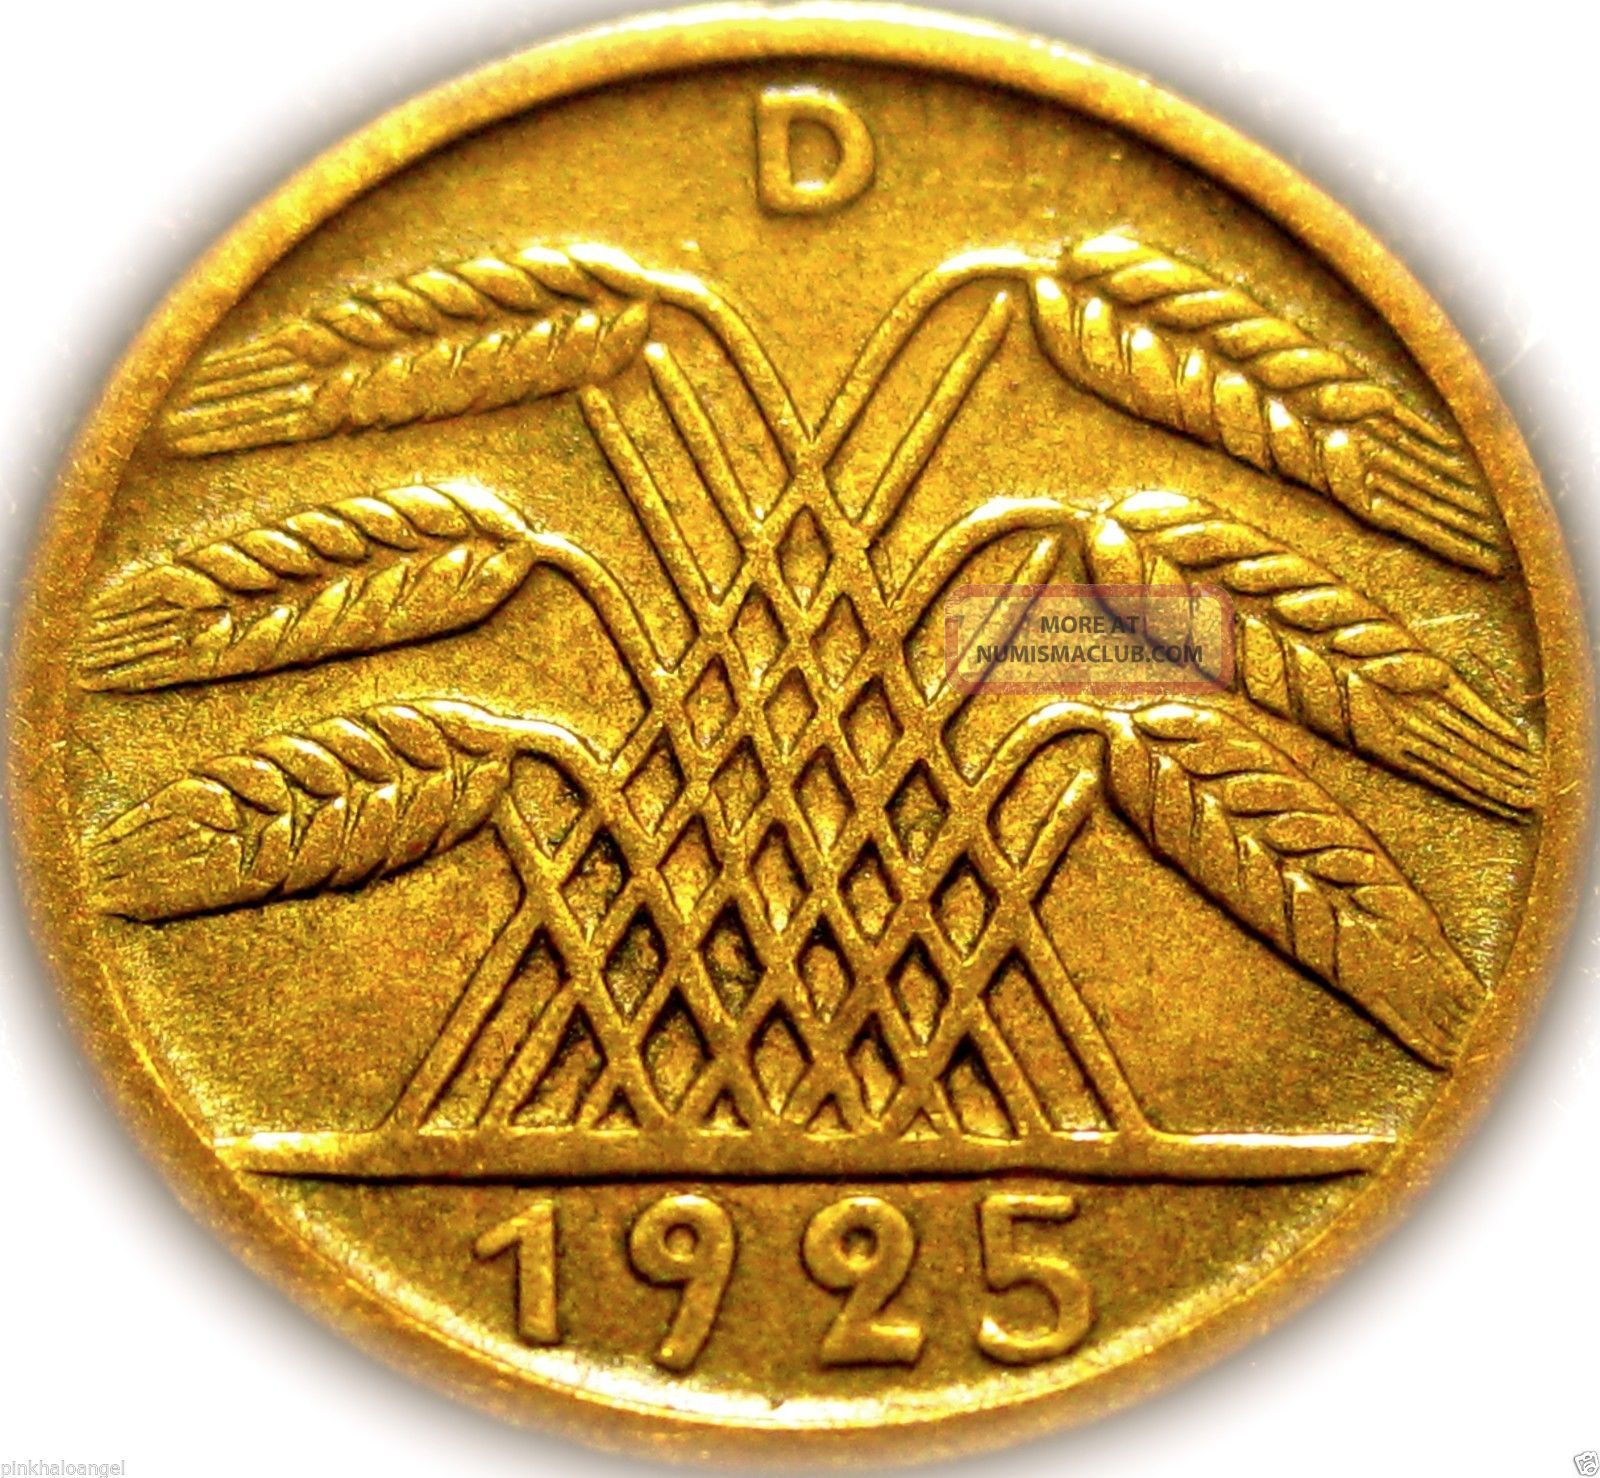 Germany German 1925d Gold Colored 5 Reichspfennig Coin